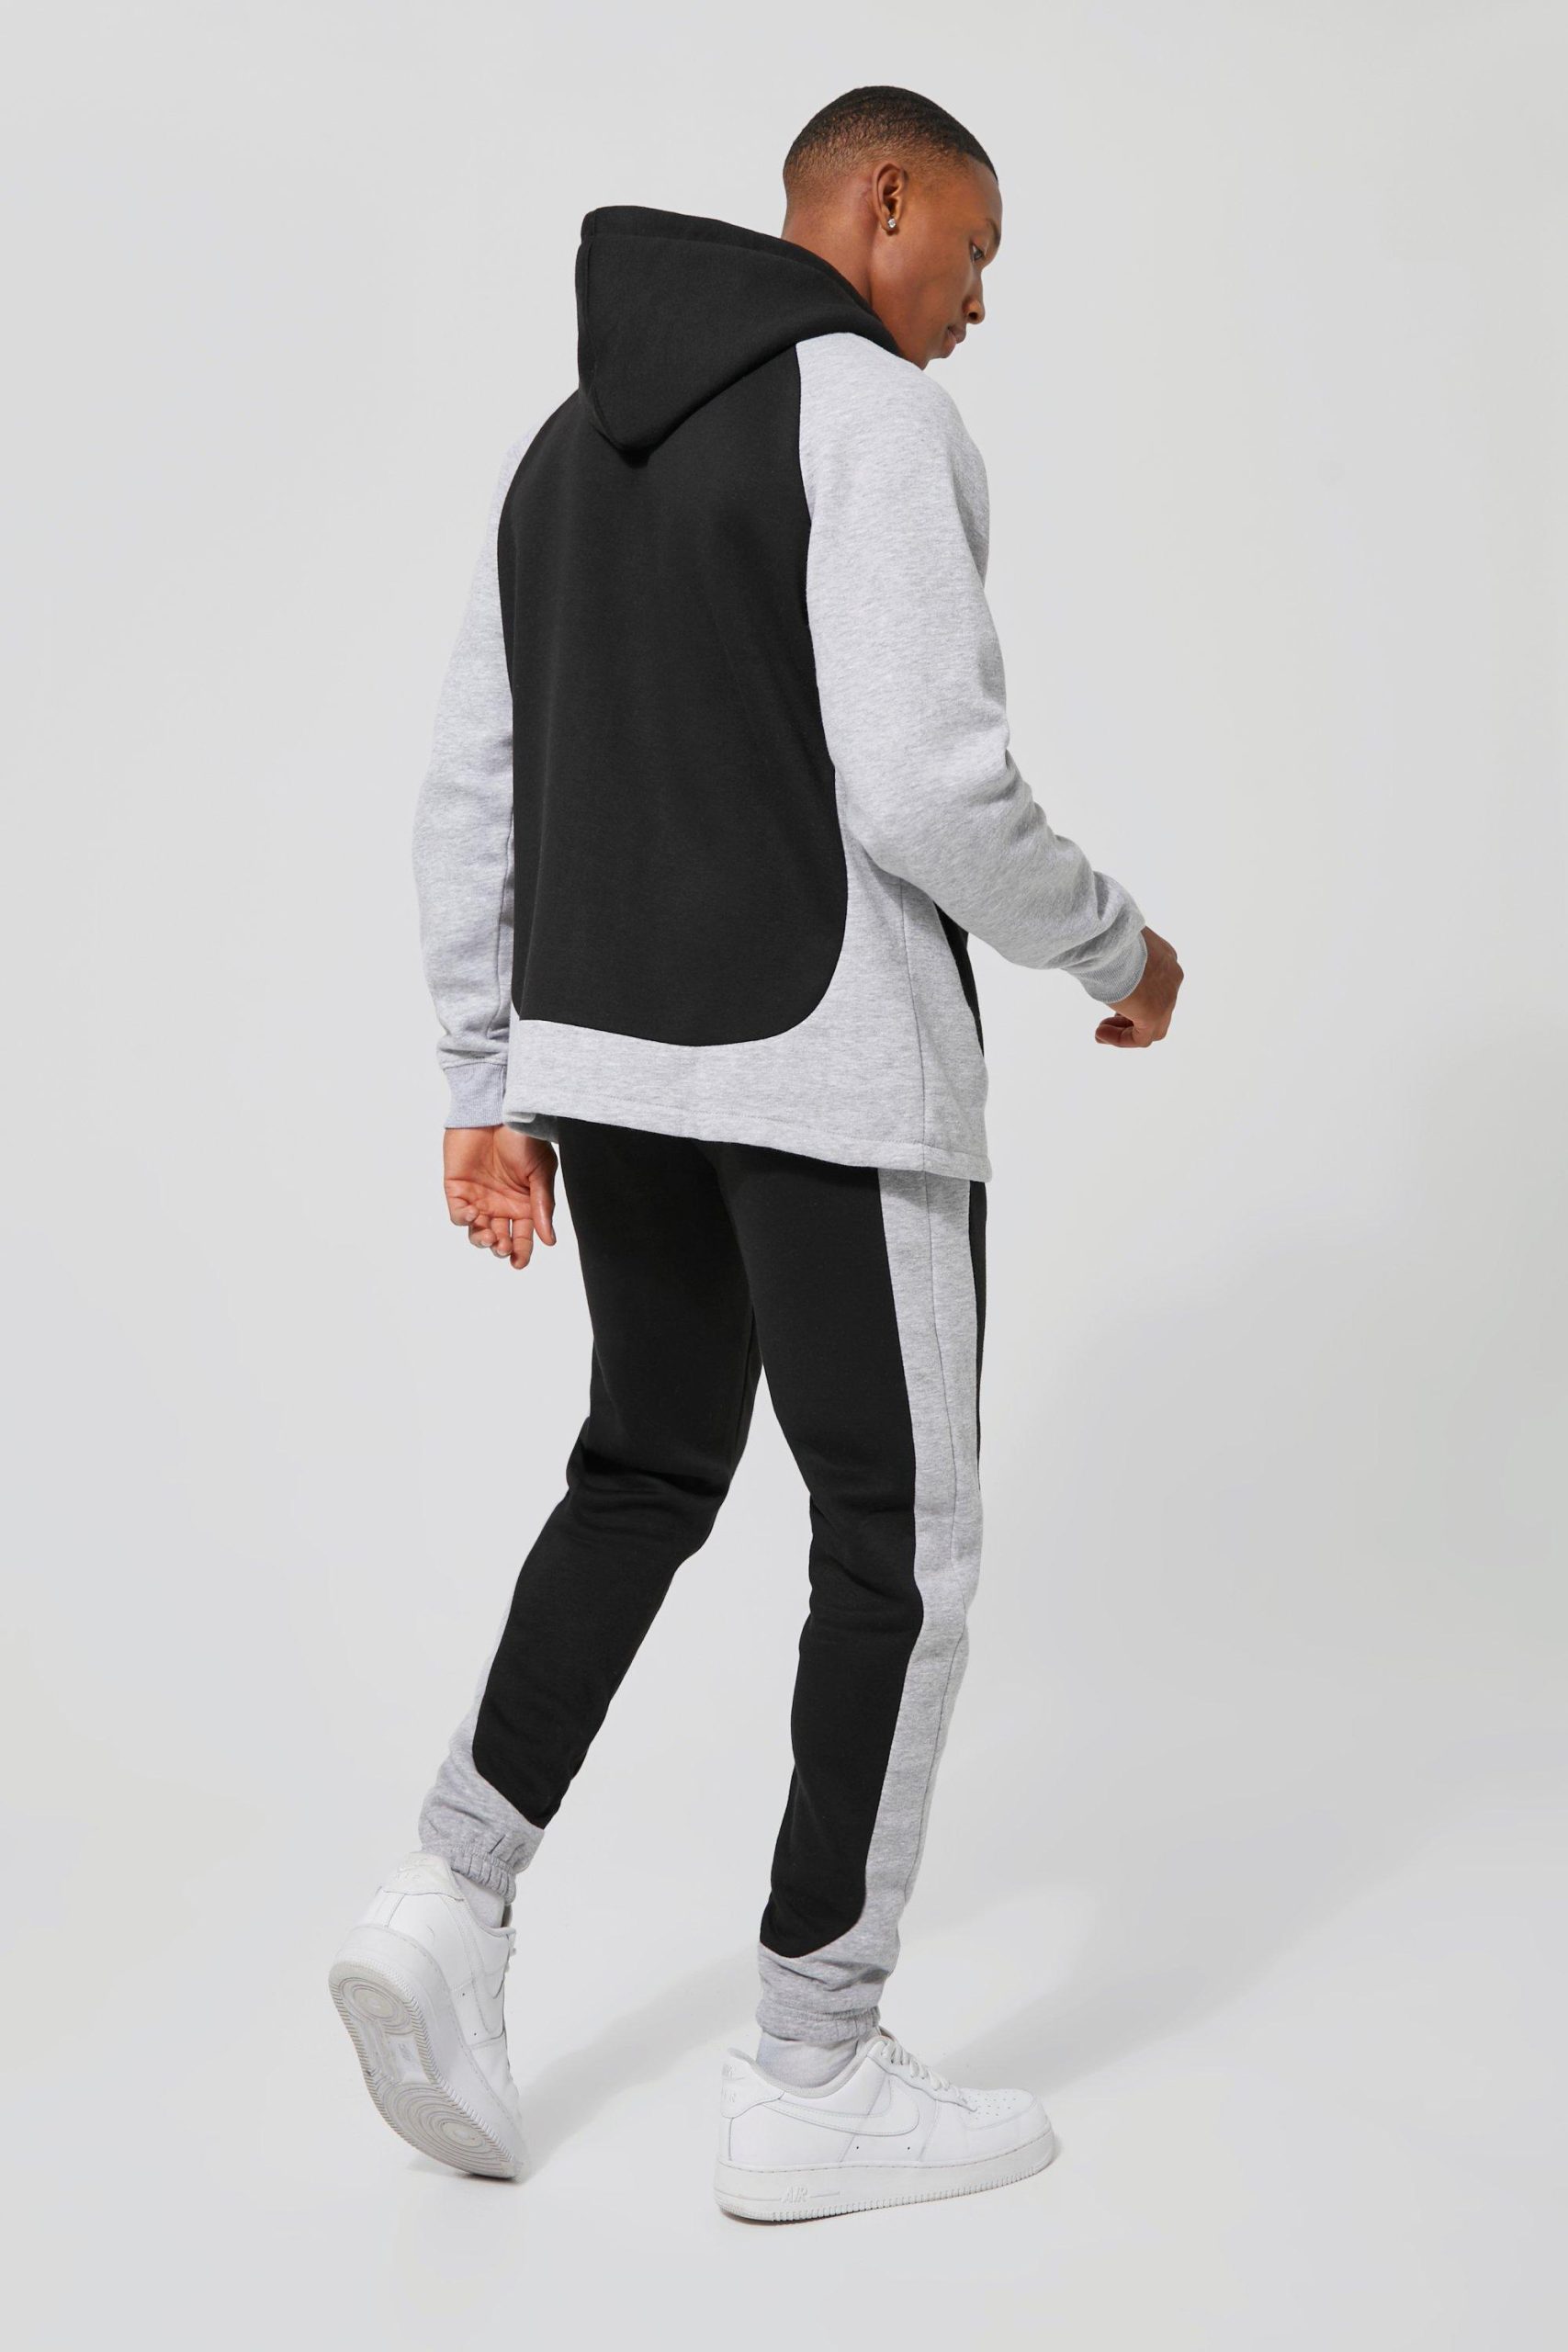 Custom Made Black & Grey Colour Block Hooded Tracksuit for Men